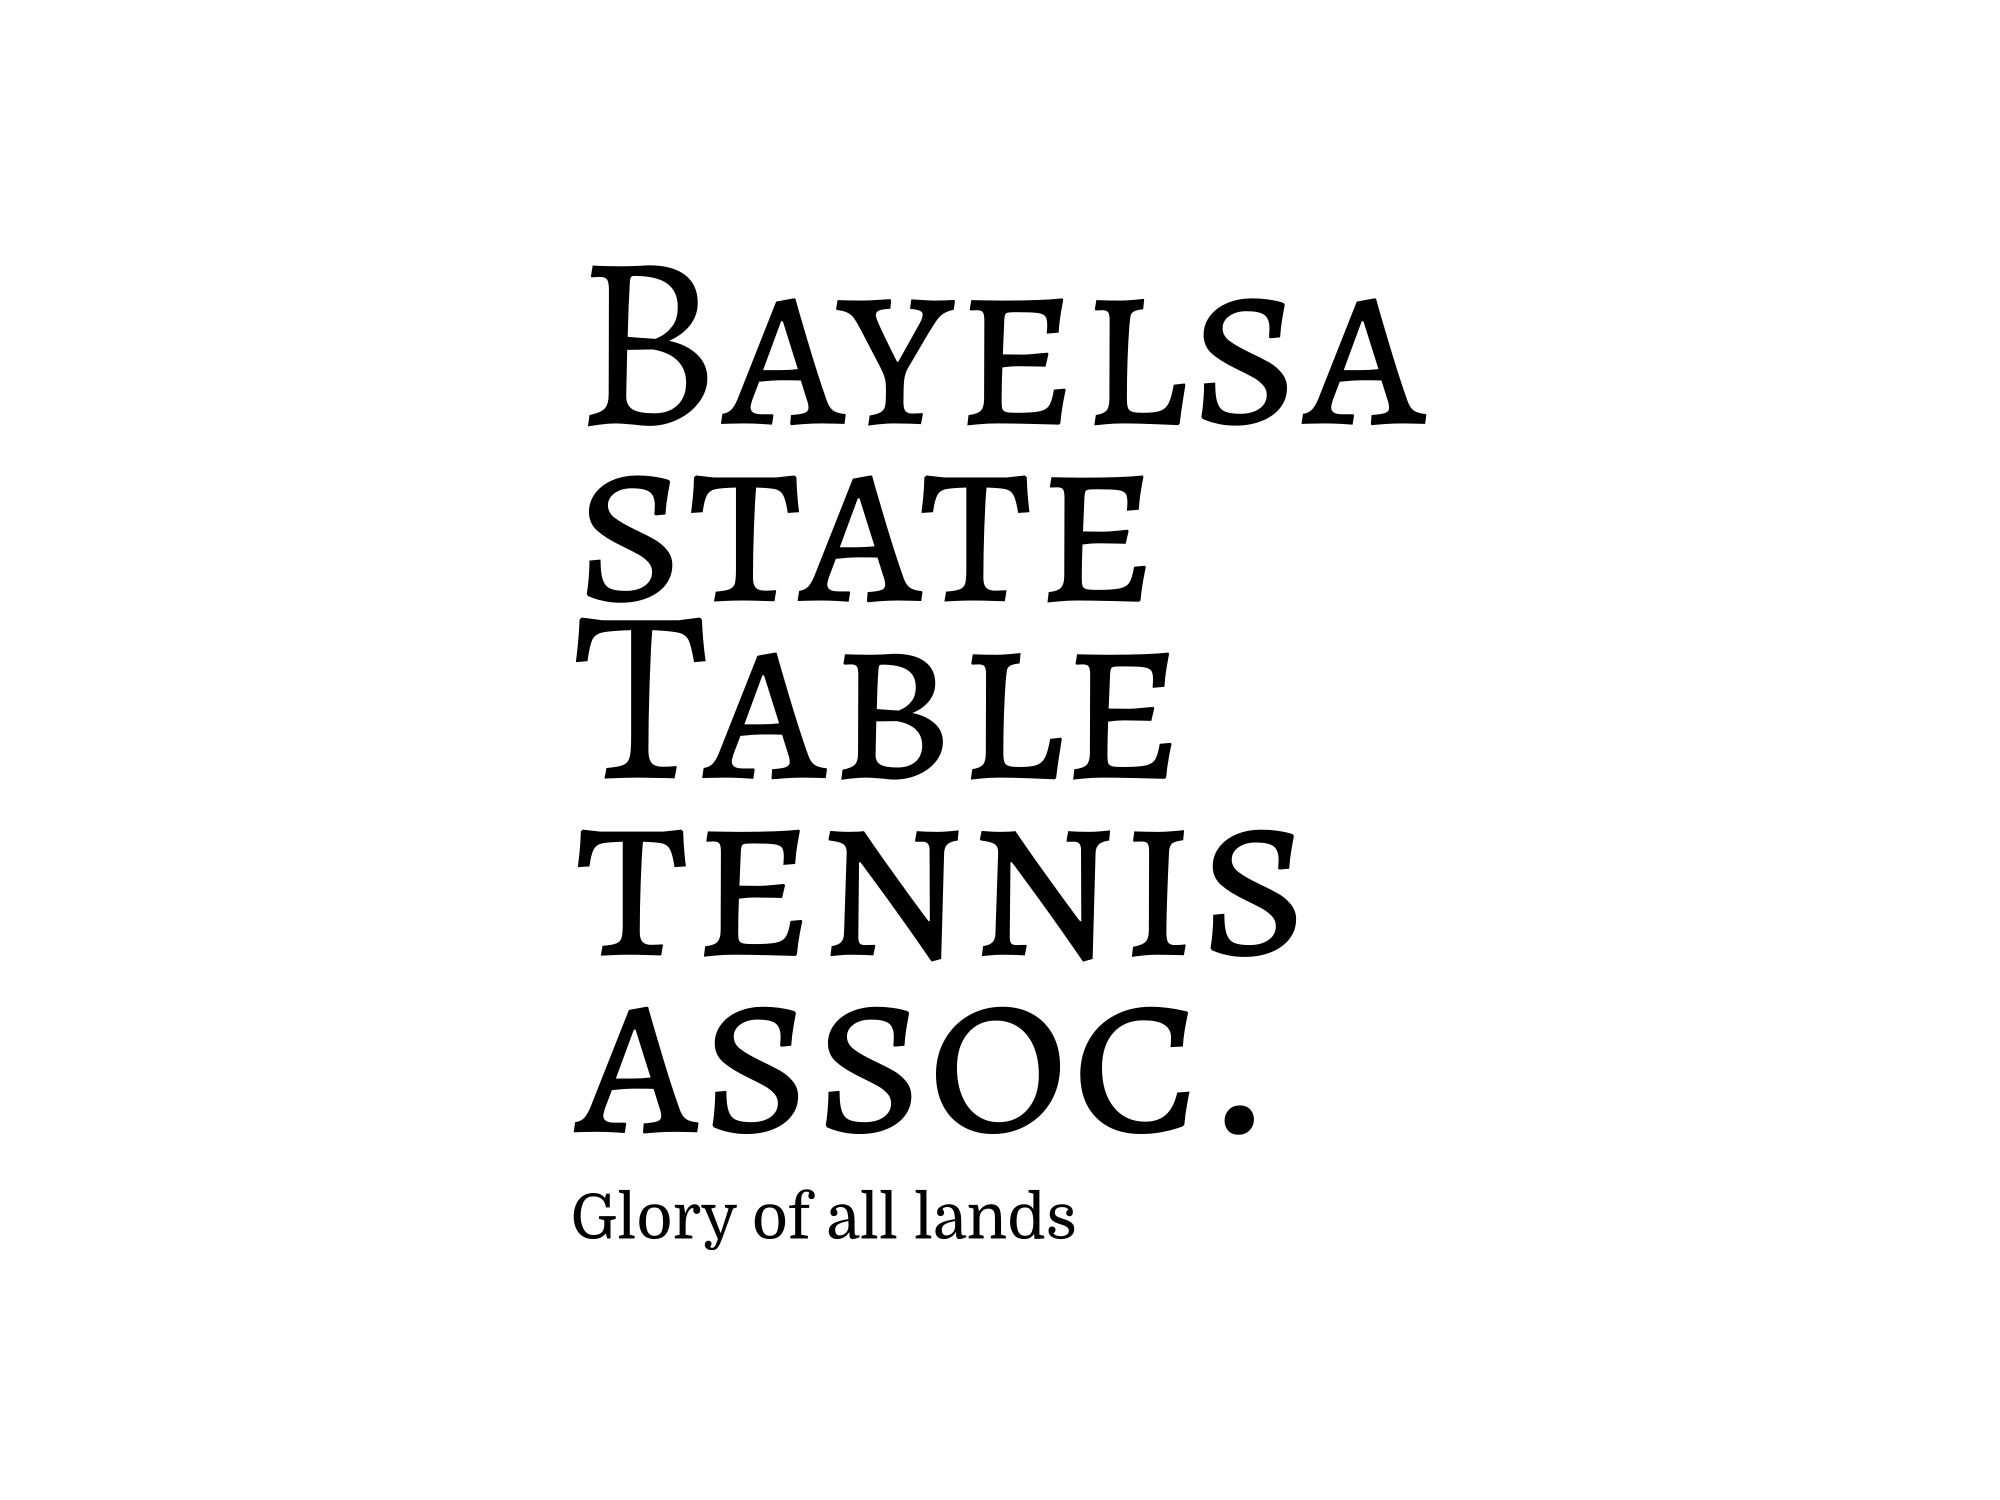 Bayelsa state Table Tennis assoc.